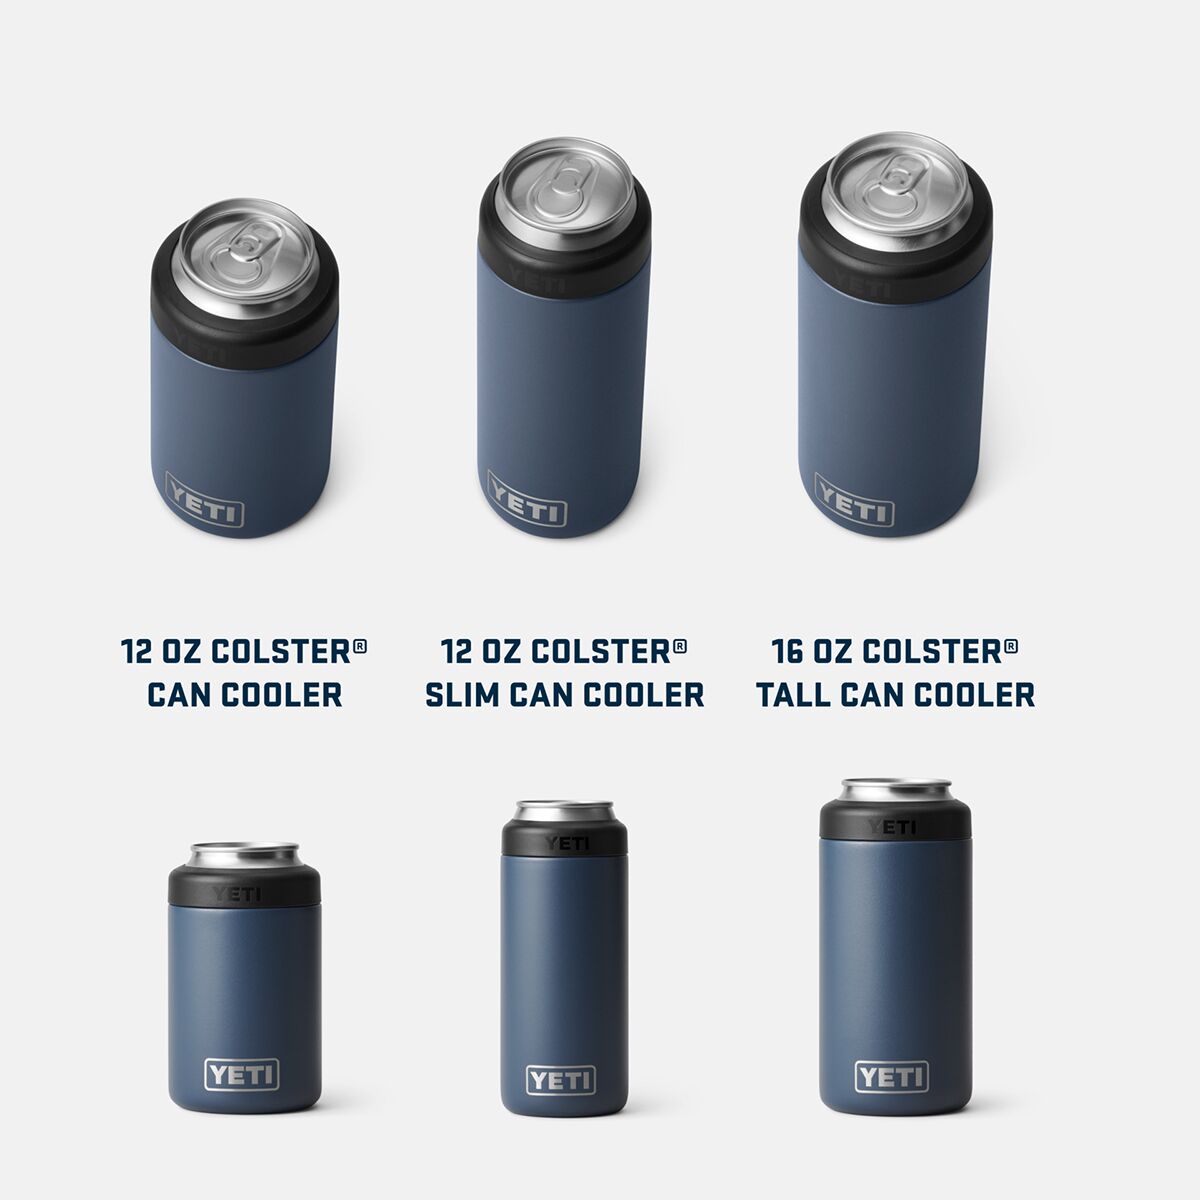 Yeti Colster 16 oz Tall Can Cooler - Aquifer Blue